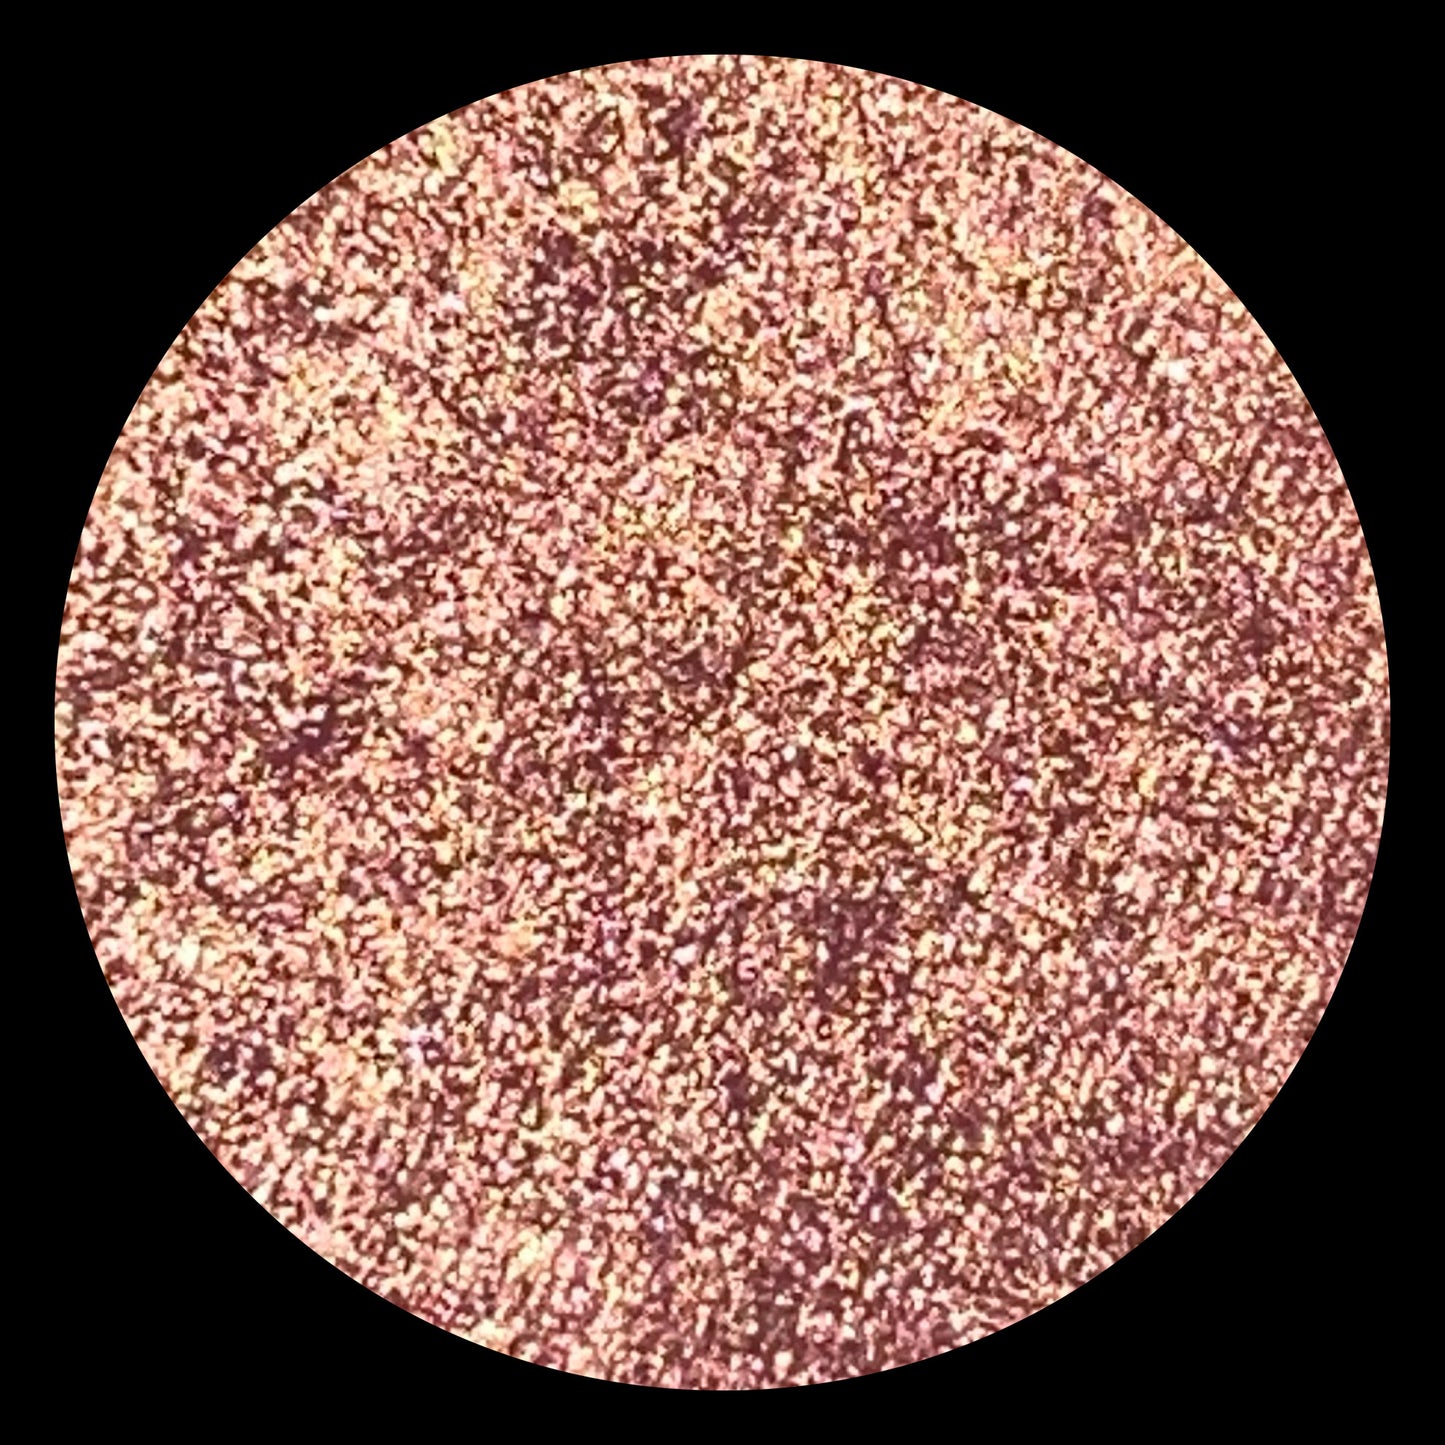 Blossom- Foiled Eyeshadow Pan